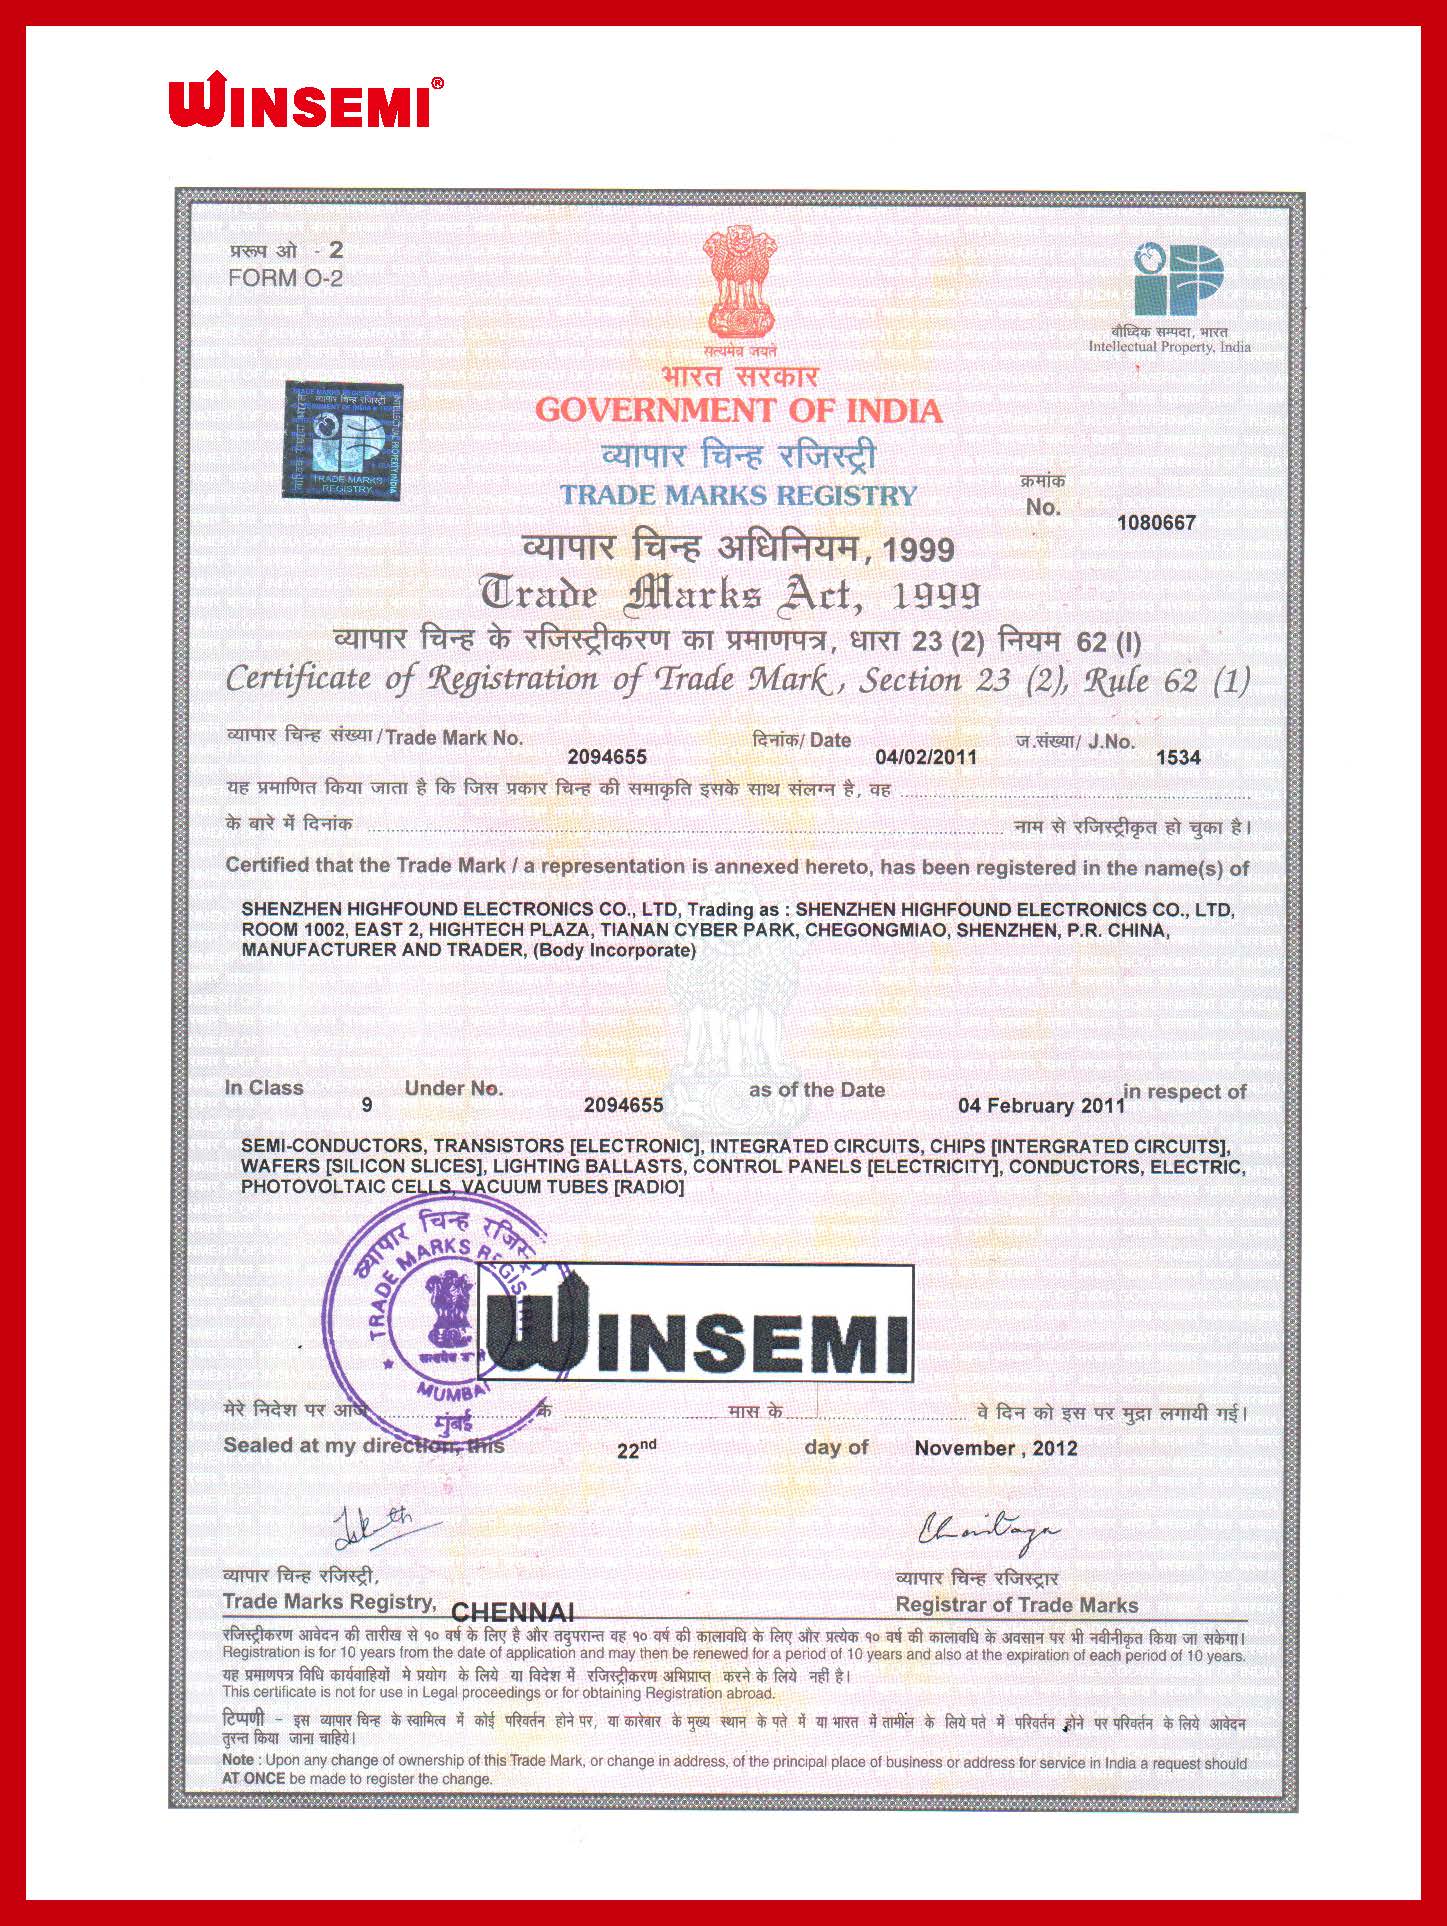 India's Trademark Certificate